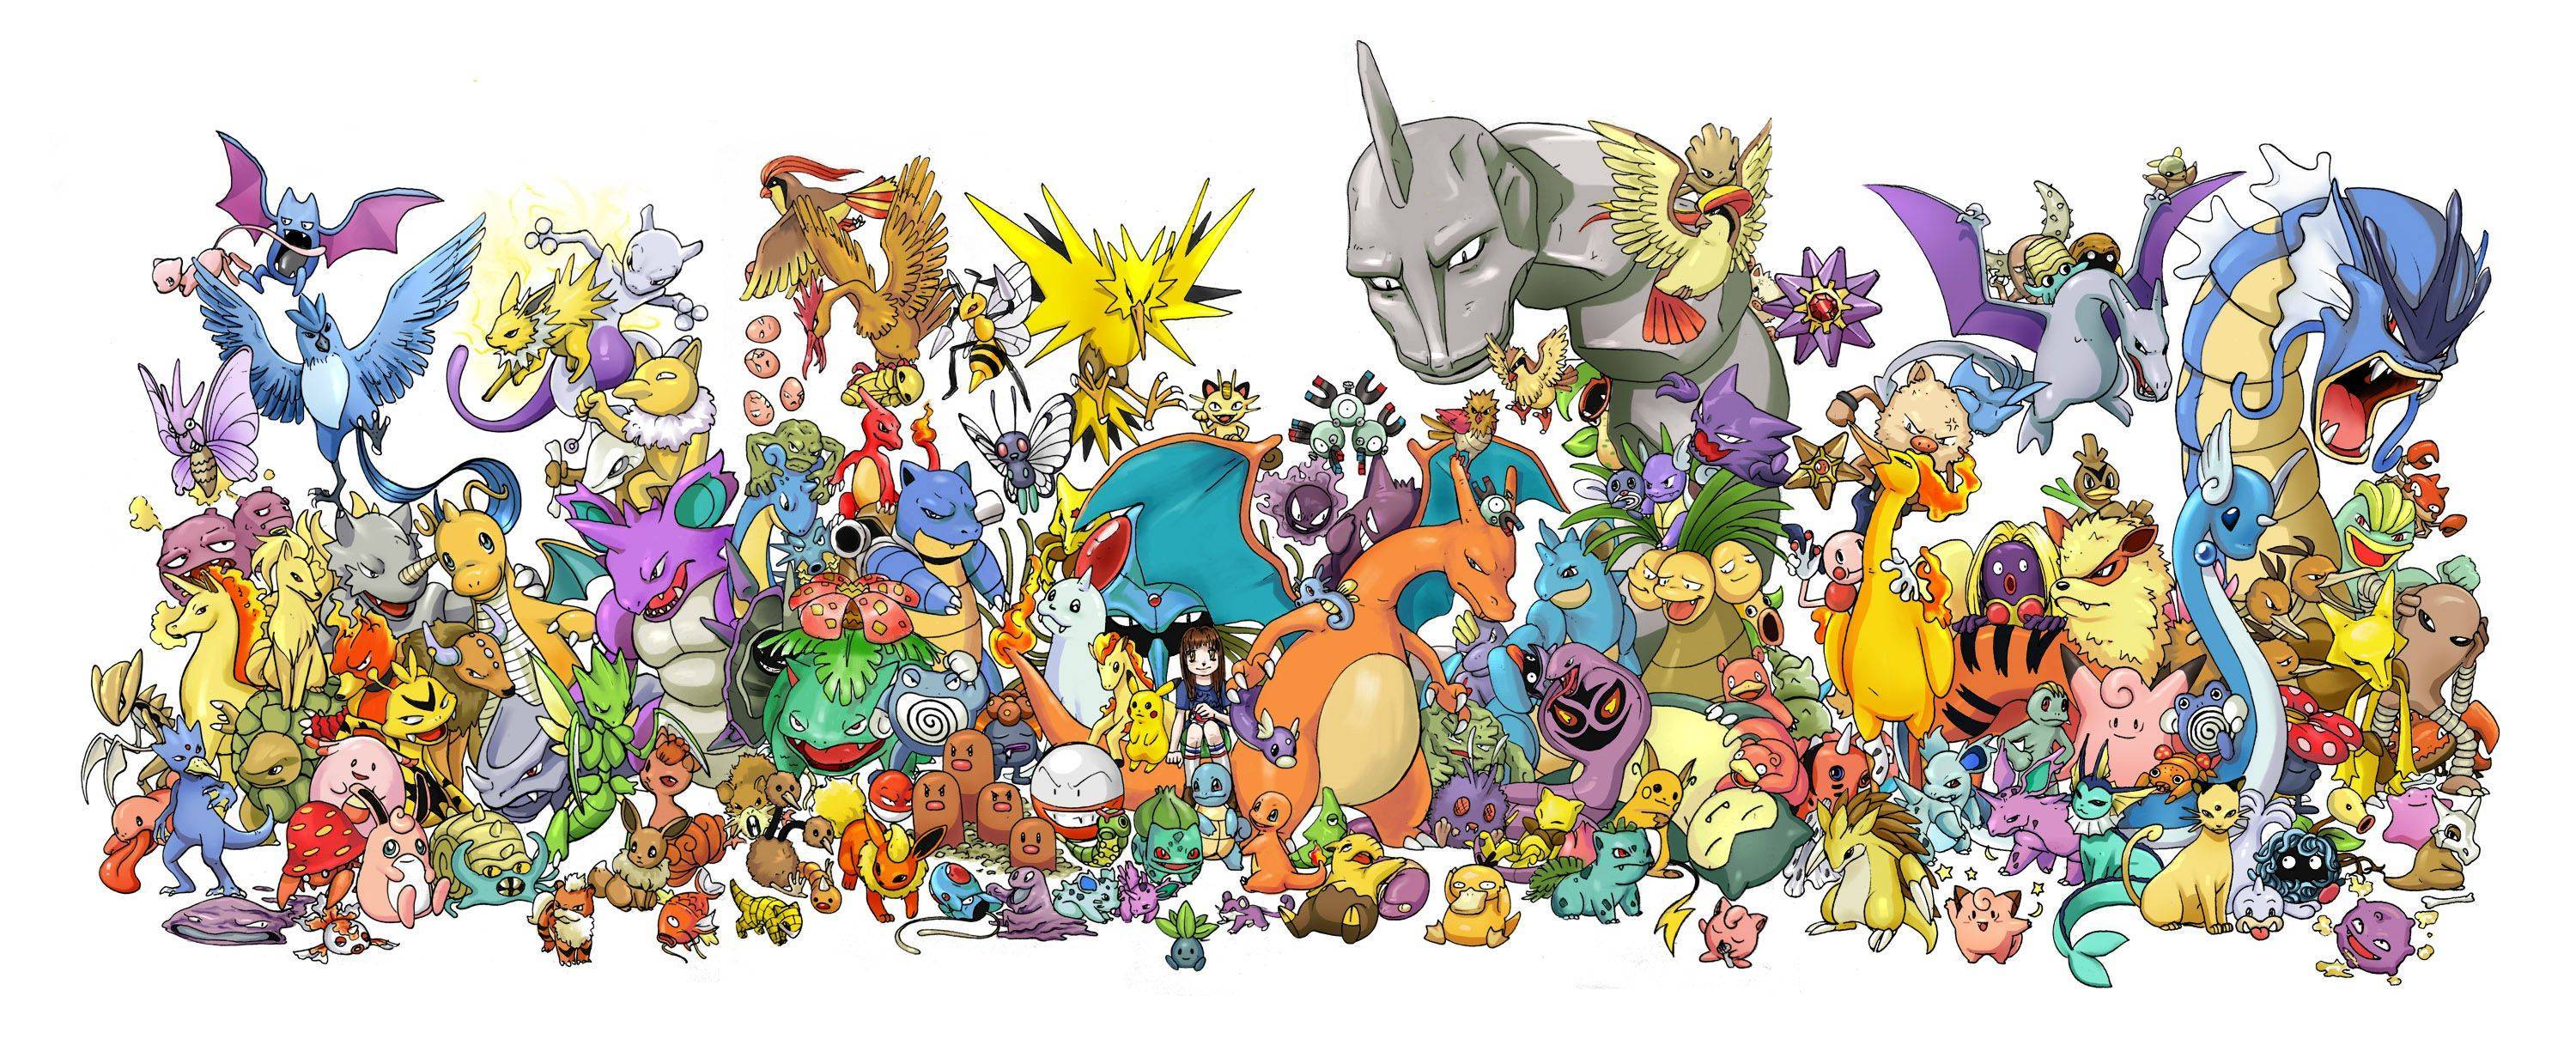 Original Pokemon Wallpaper Free Original Pokemon Background